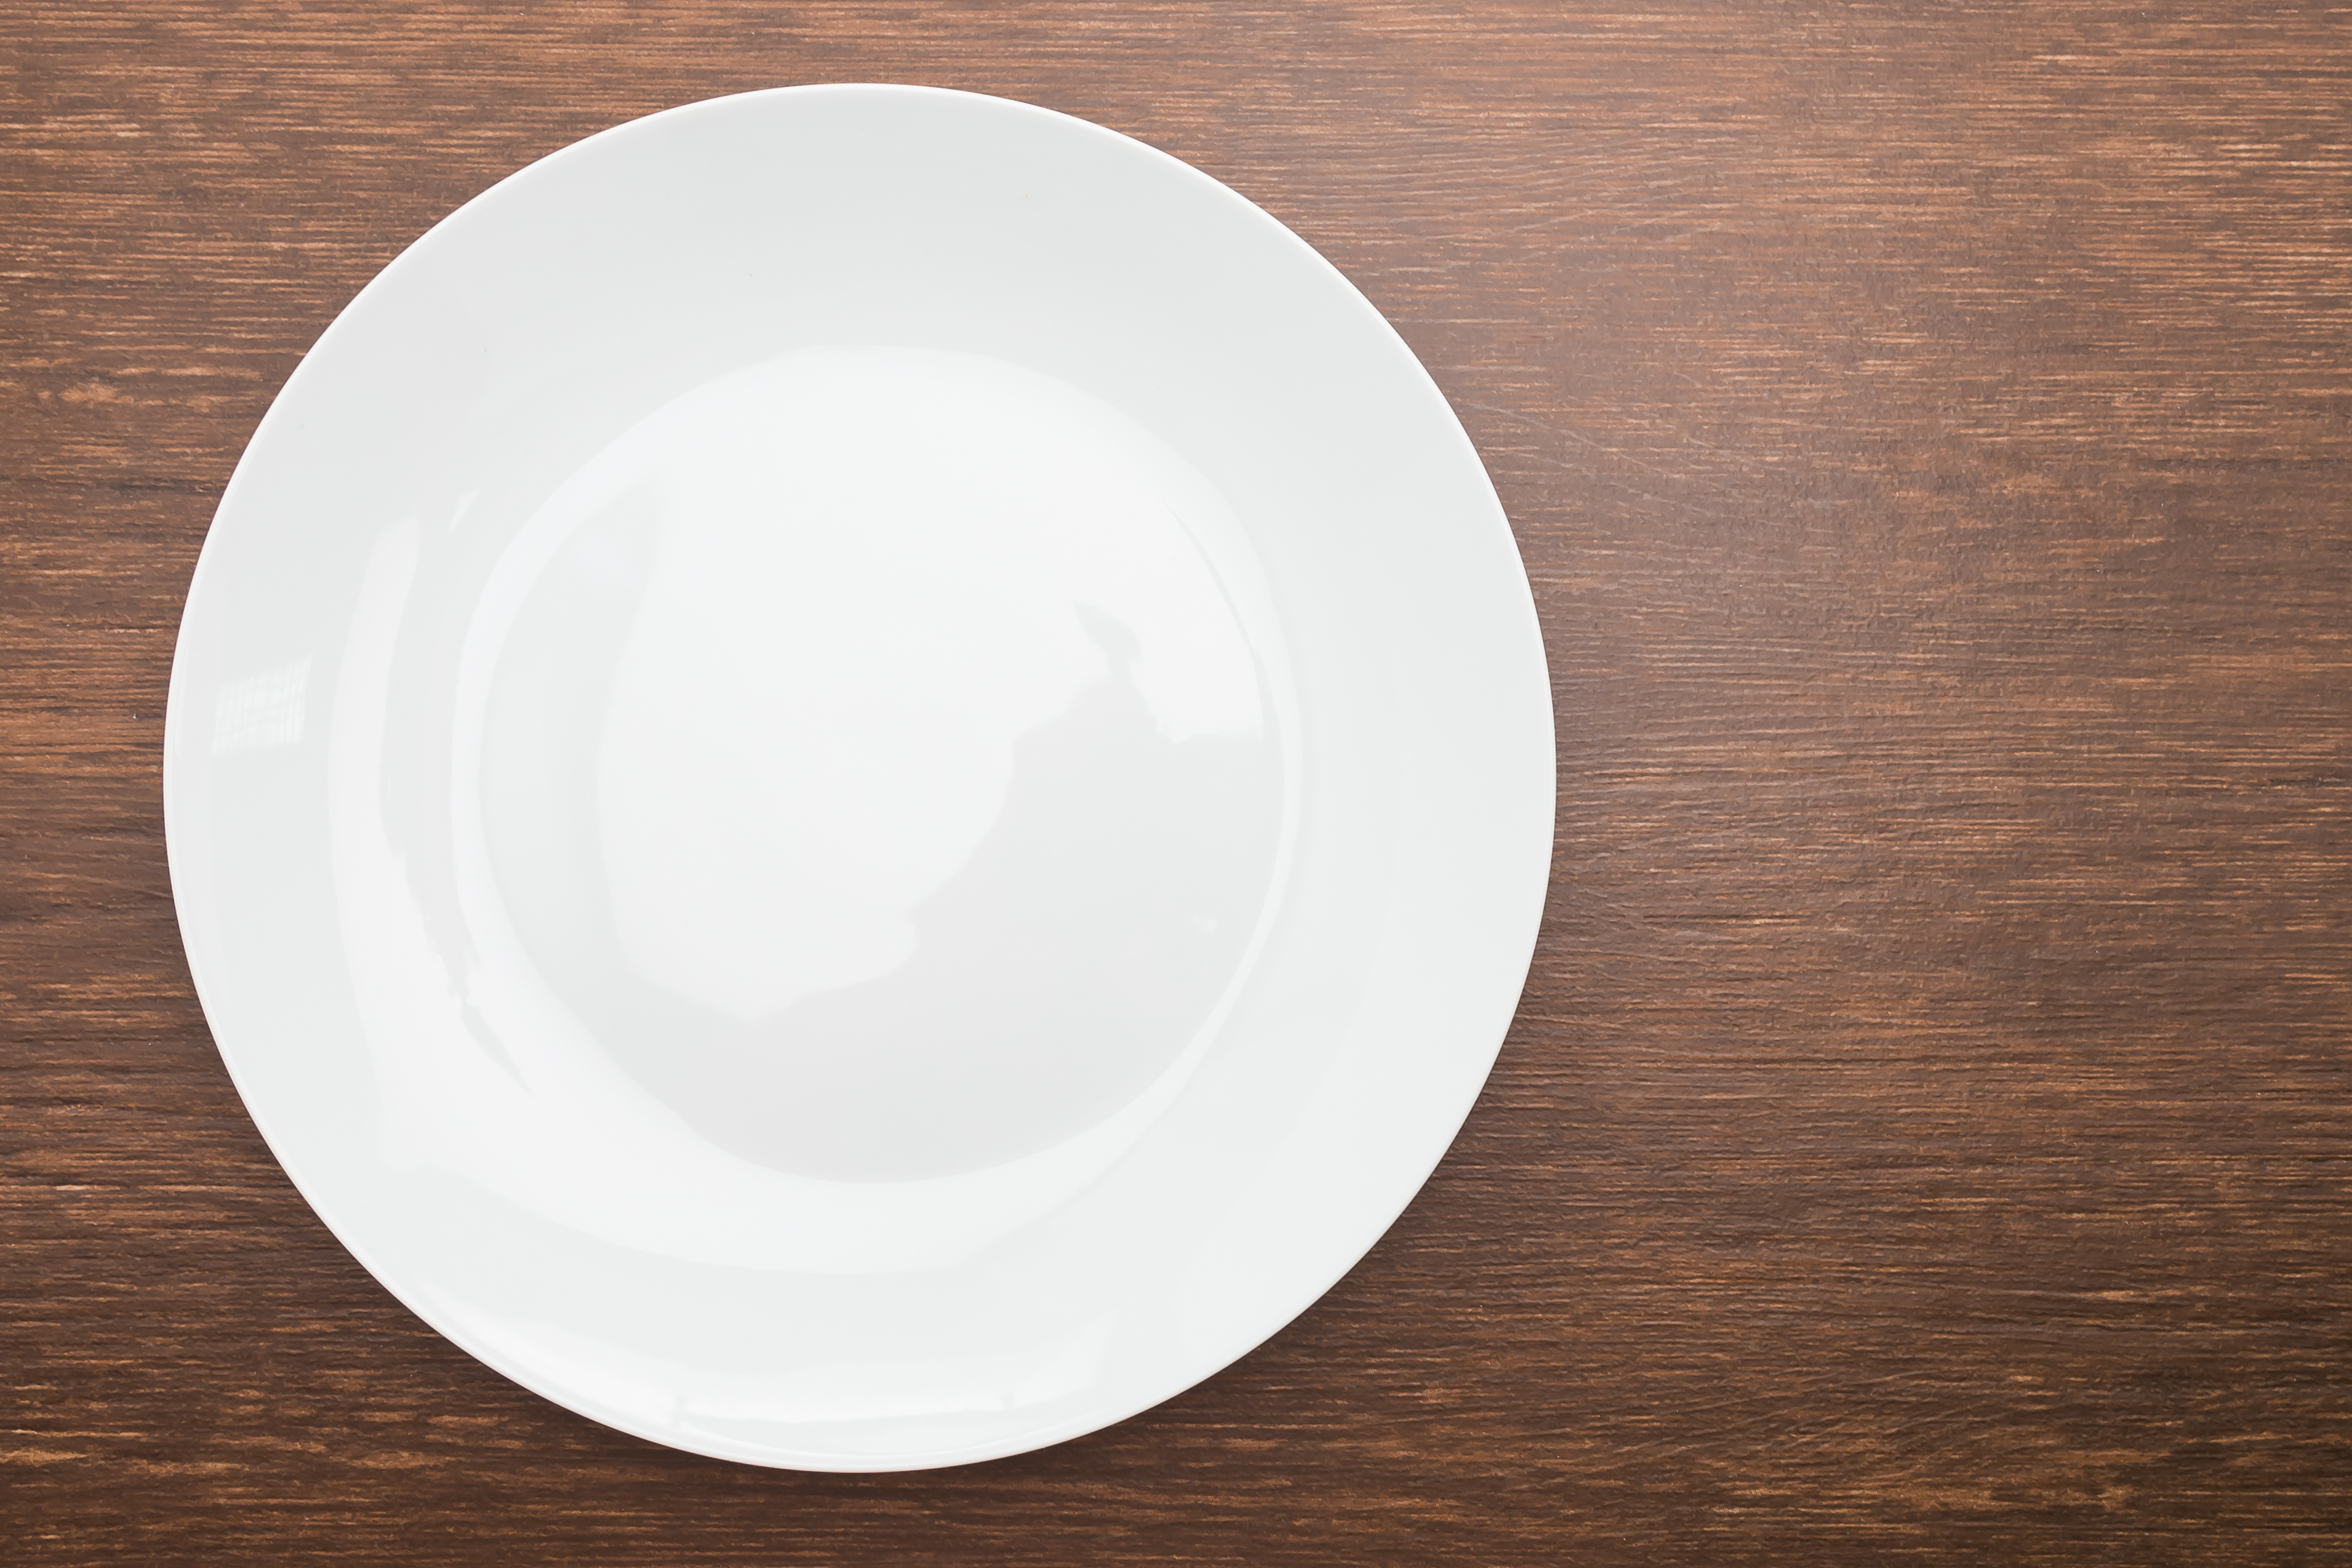 cutlery-overhead-wooden-dining-food.jpg